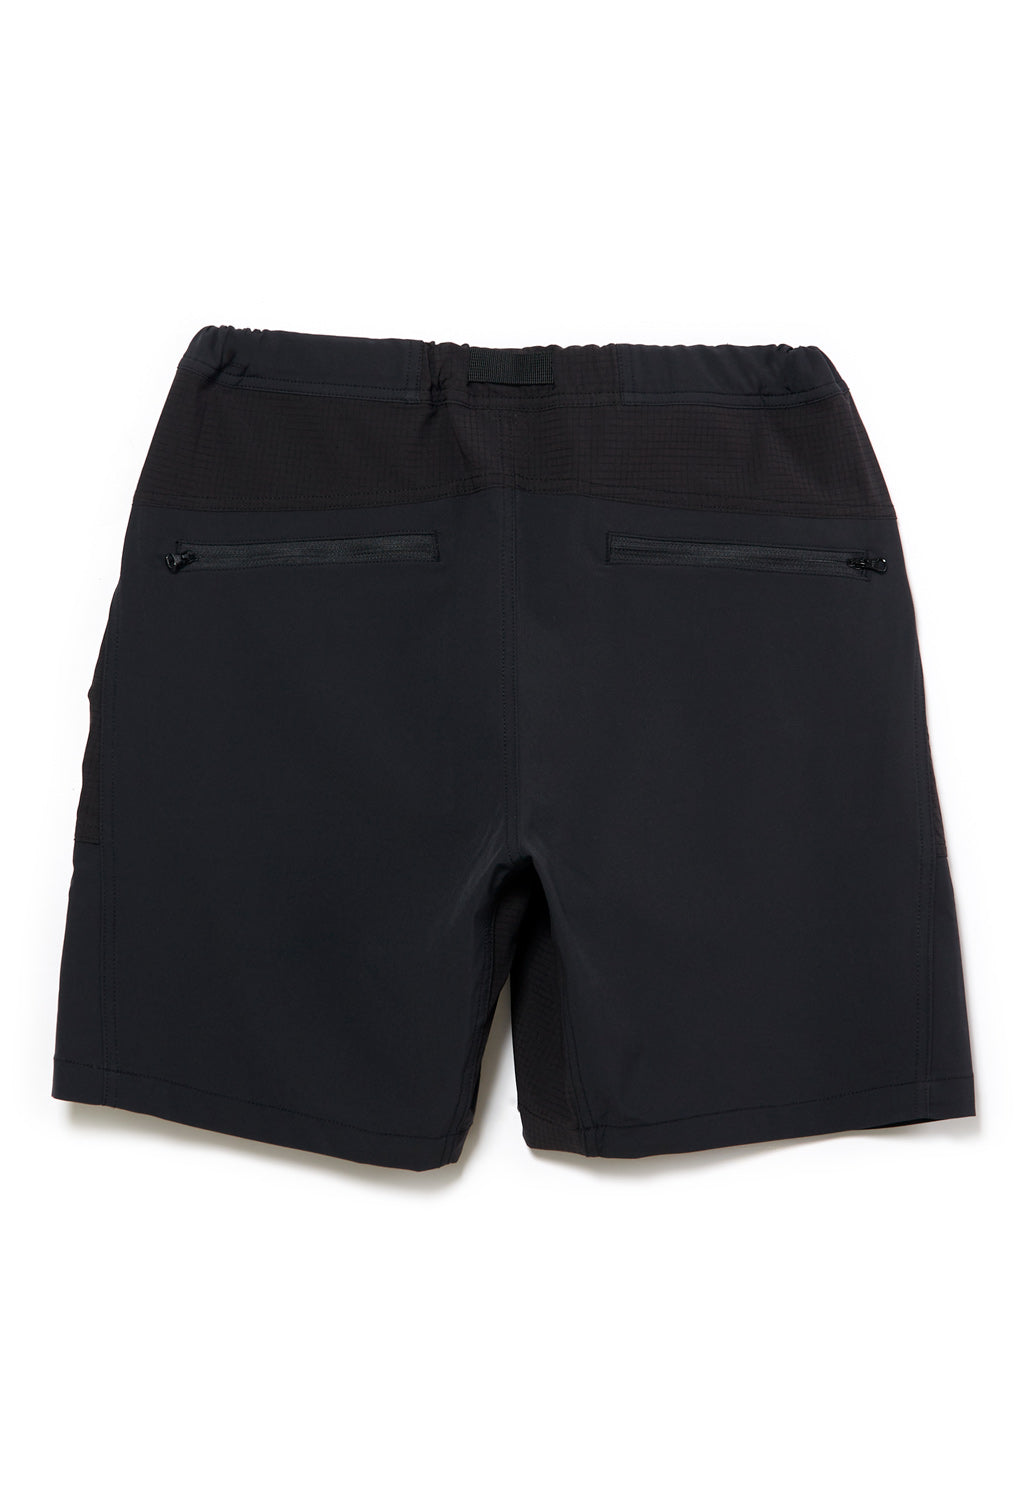 CAYL EQ Hybrid Shorts - Black